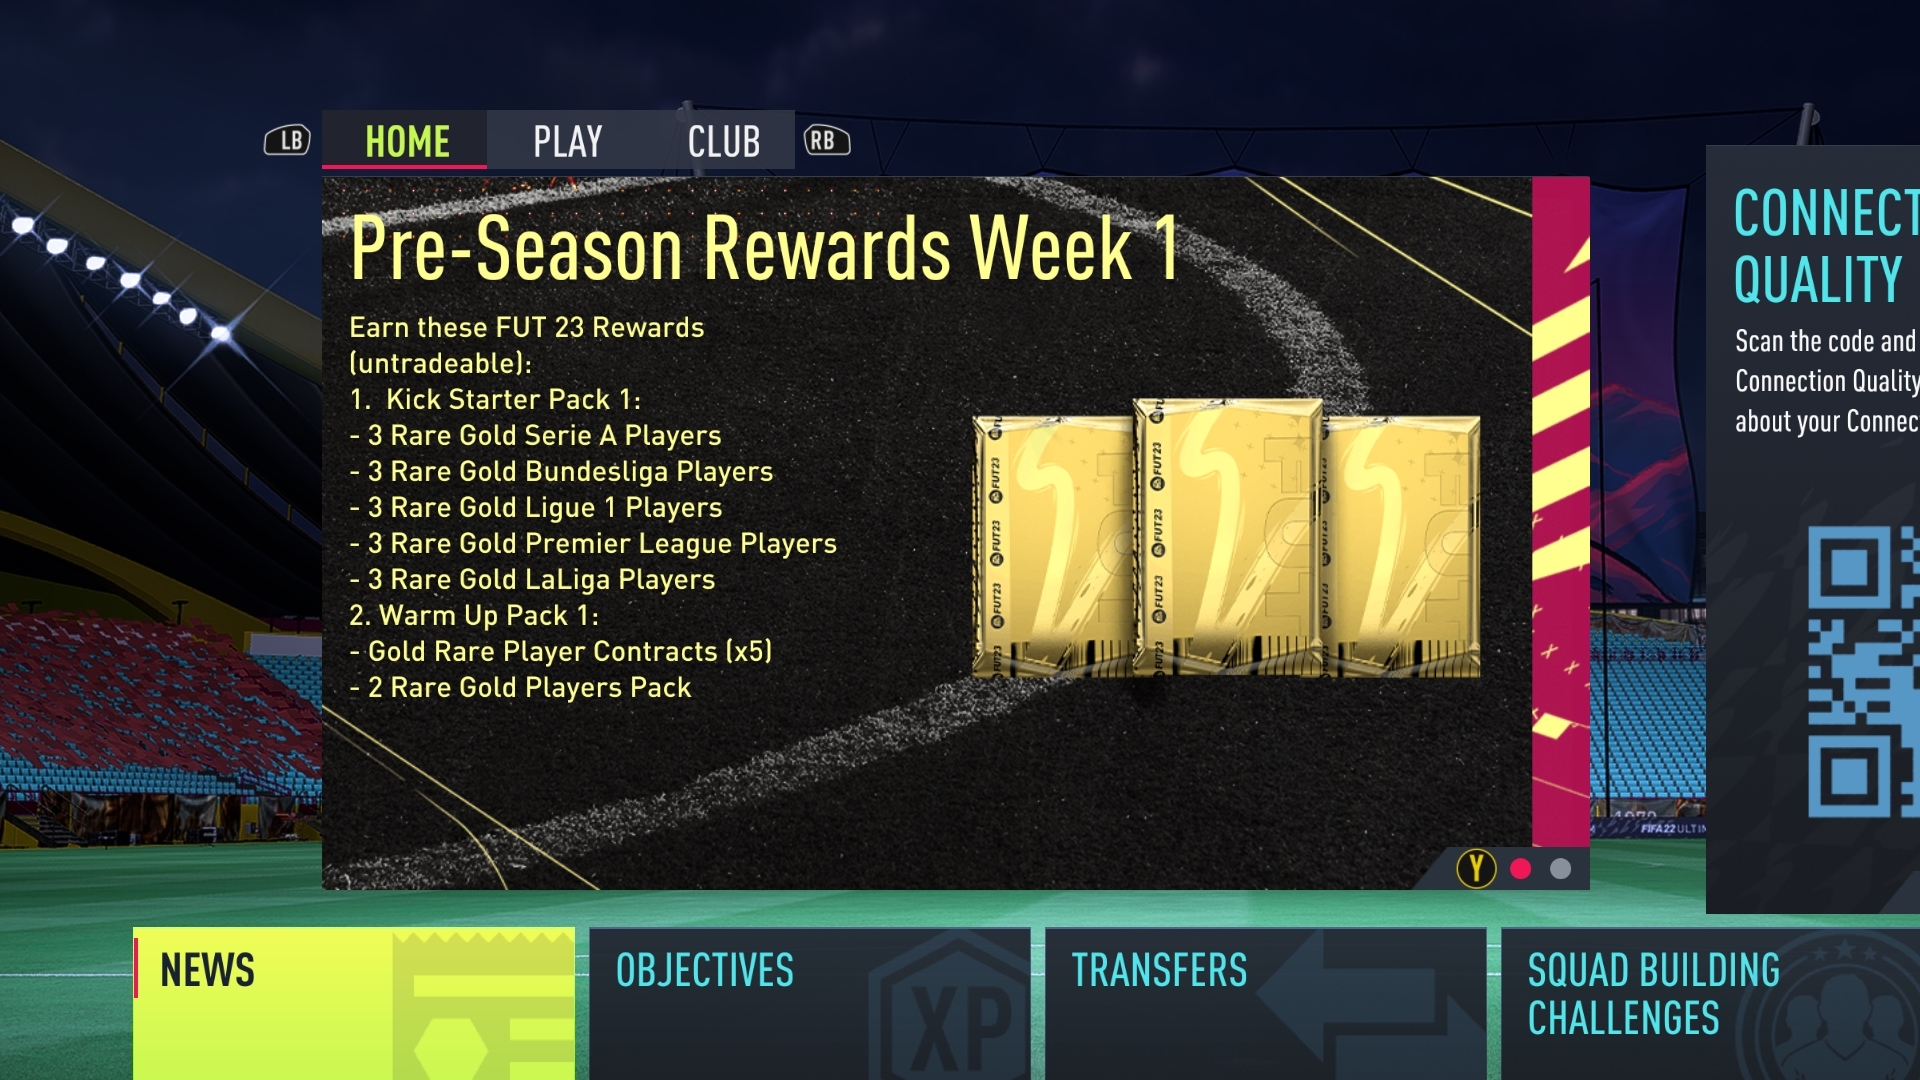 FIFA 23 Prime Gaming Rewards